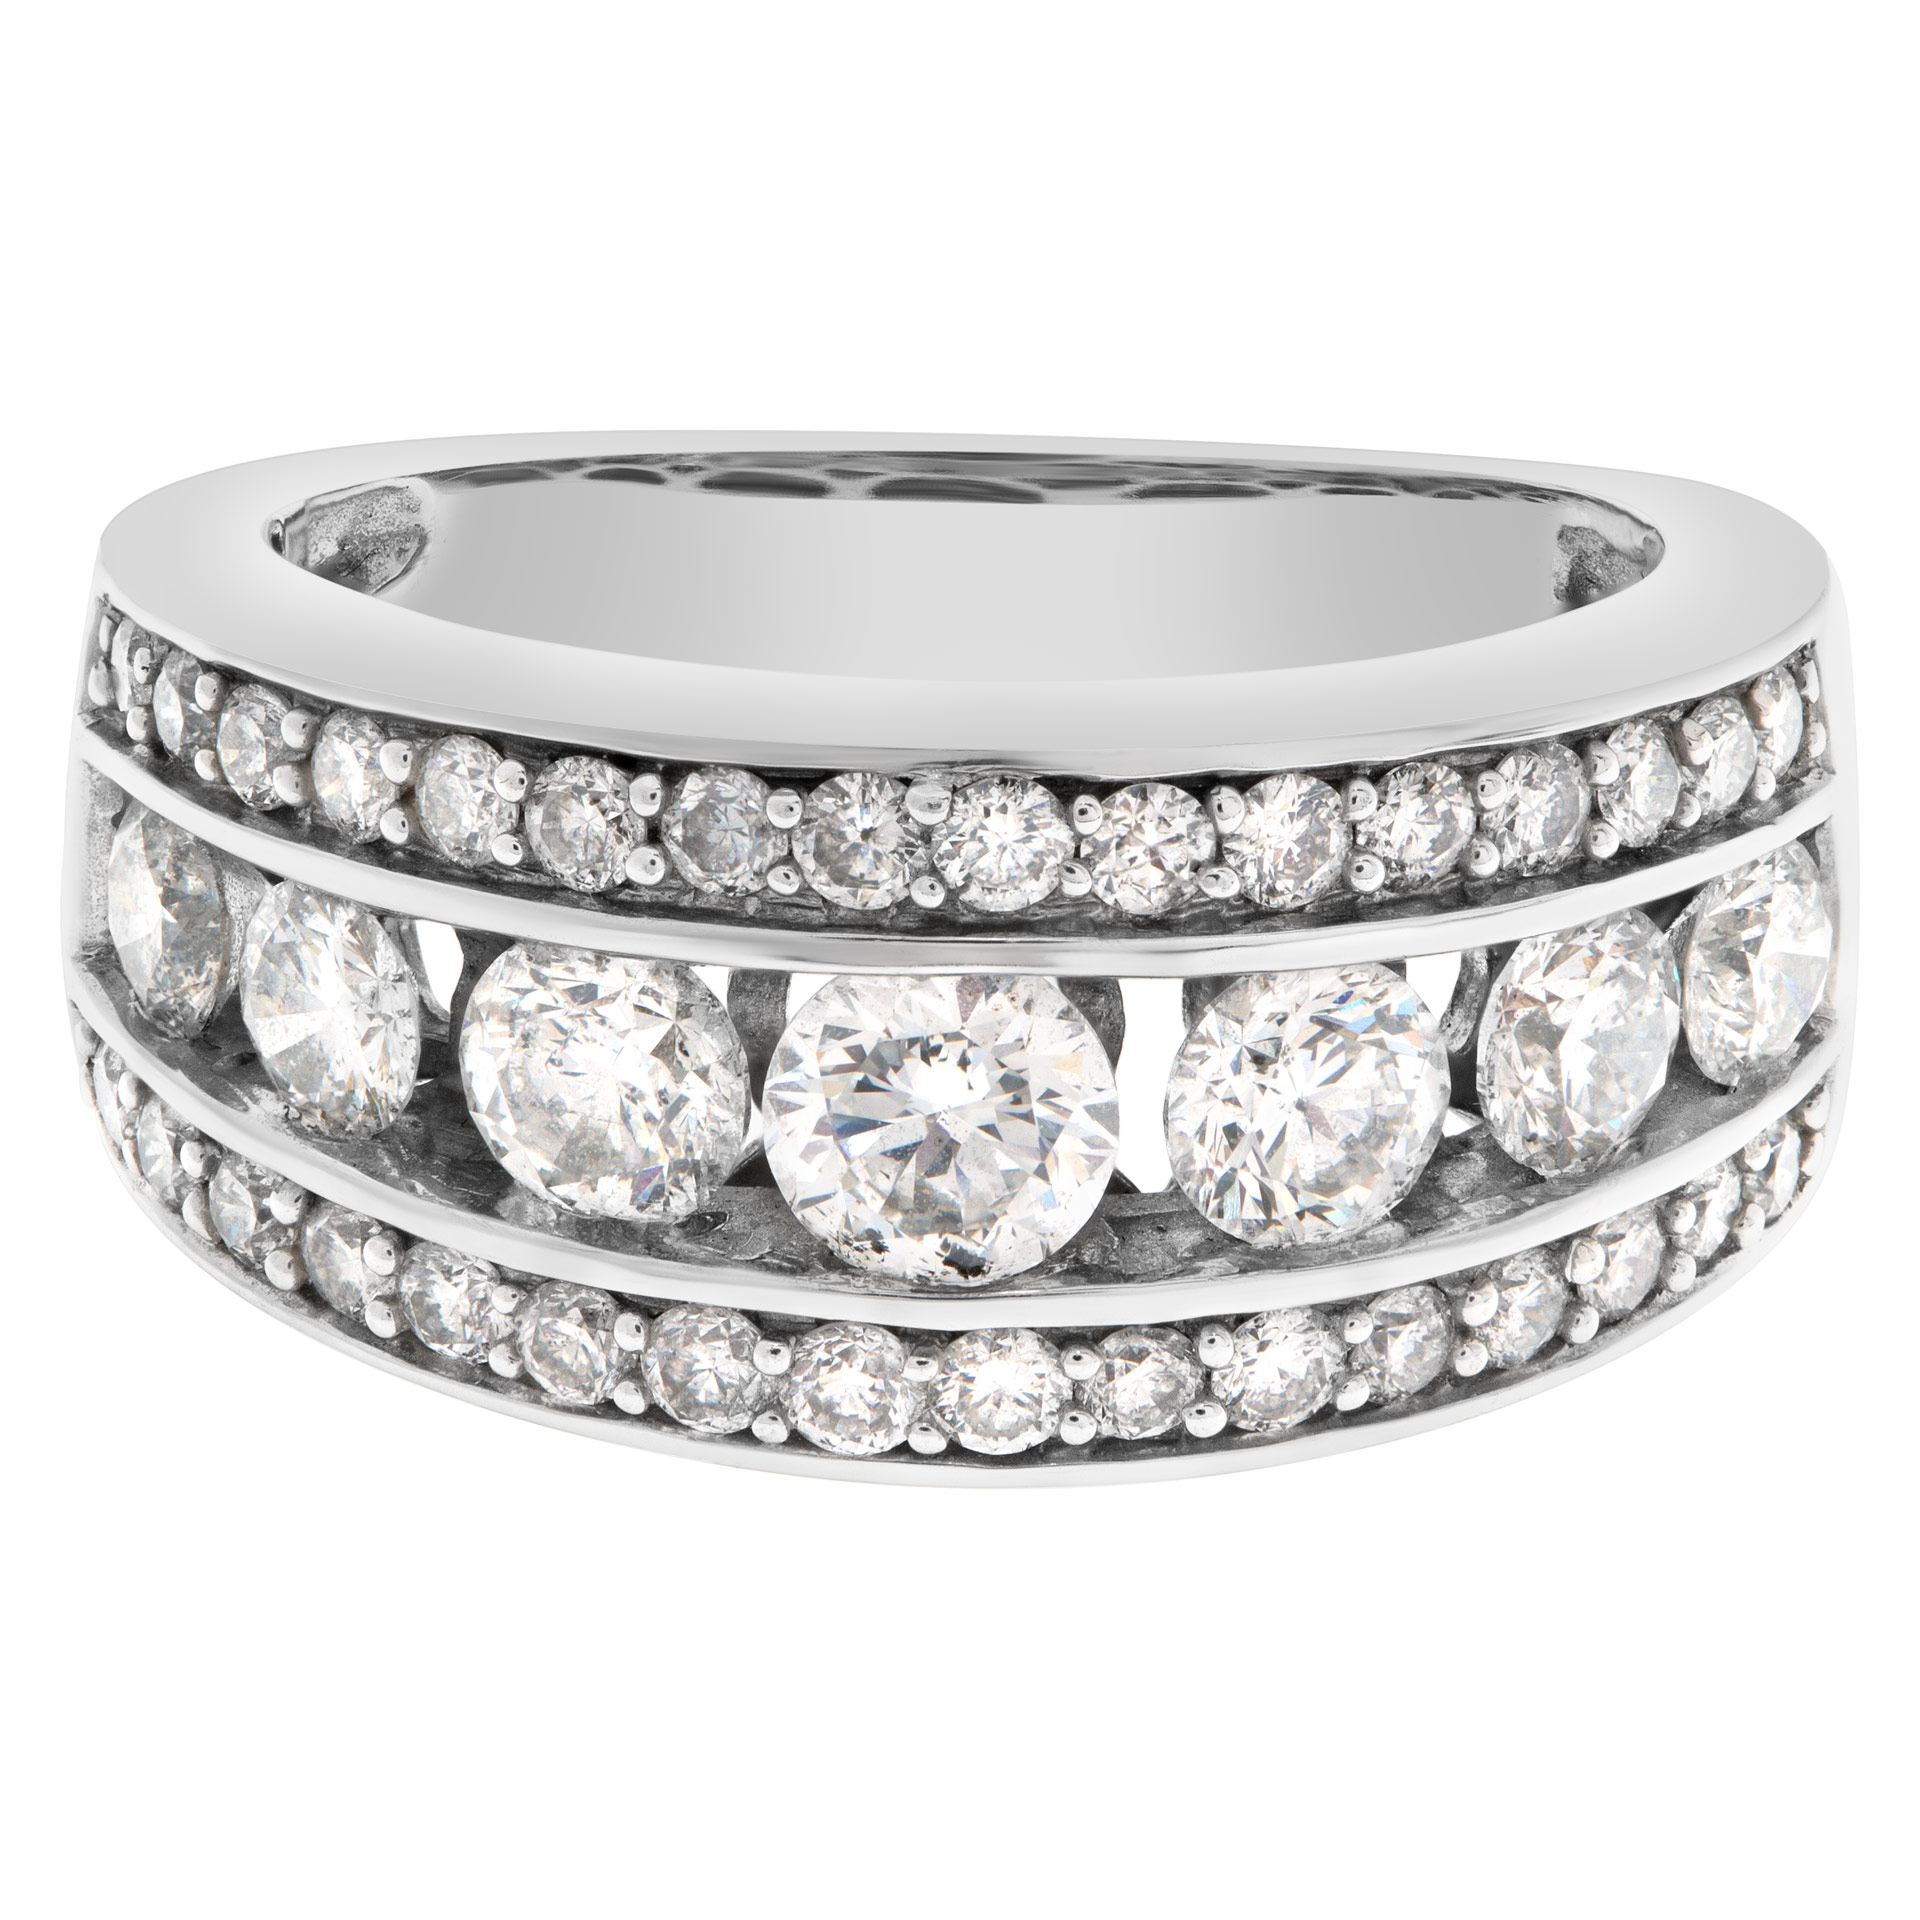 Elegant diamond ring set in 14k white gold with approximately 1.25 carat in diamonds image 1